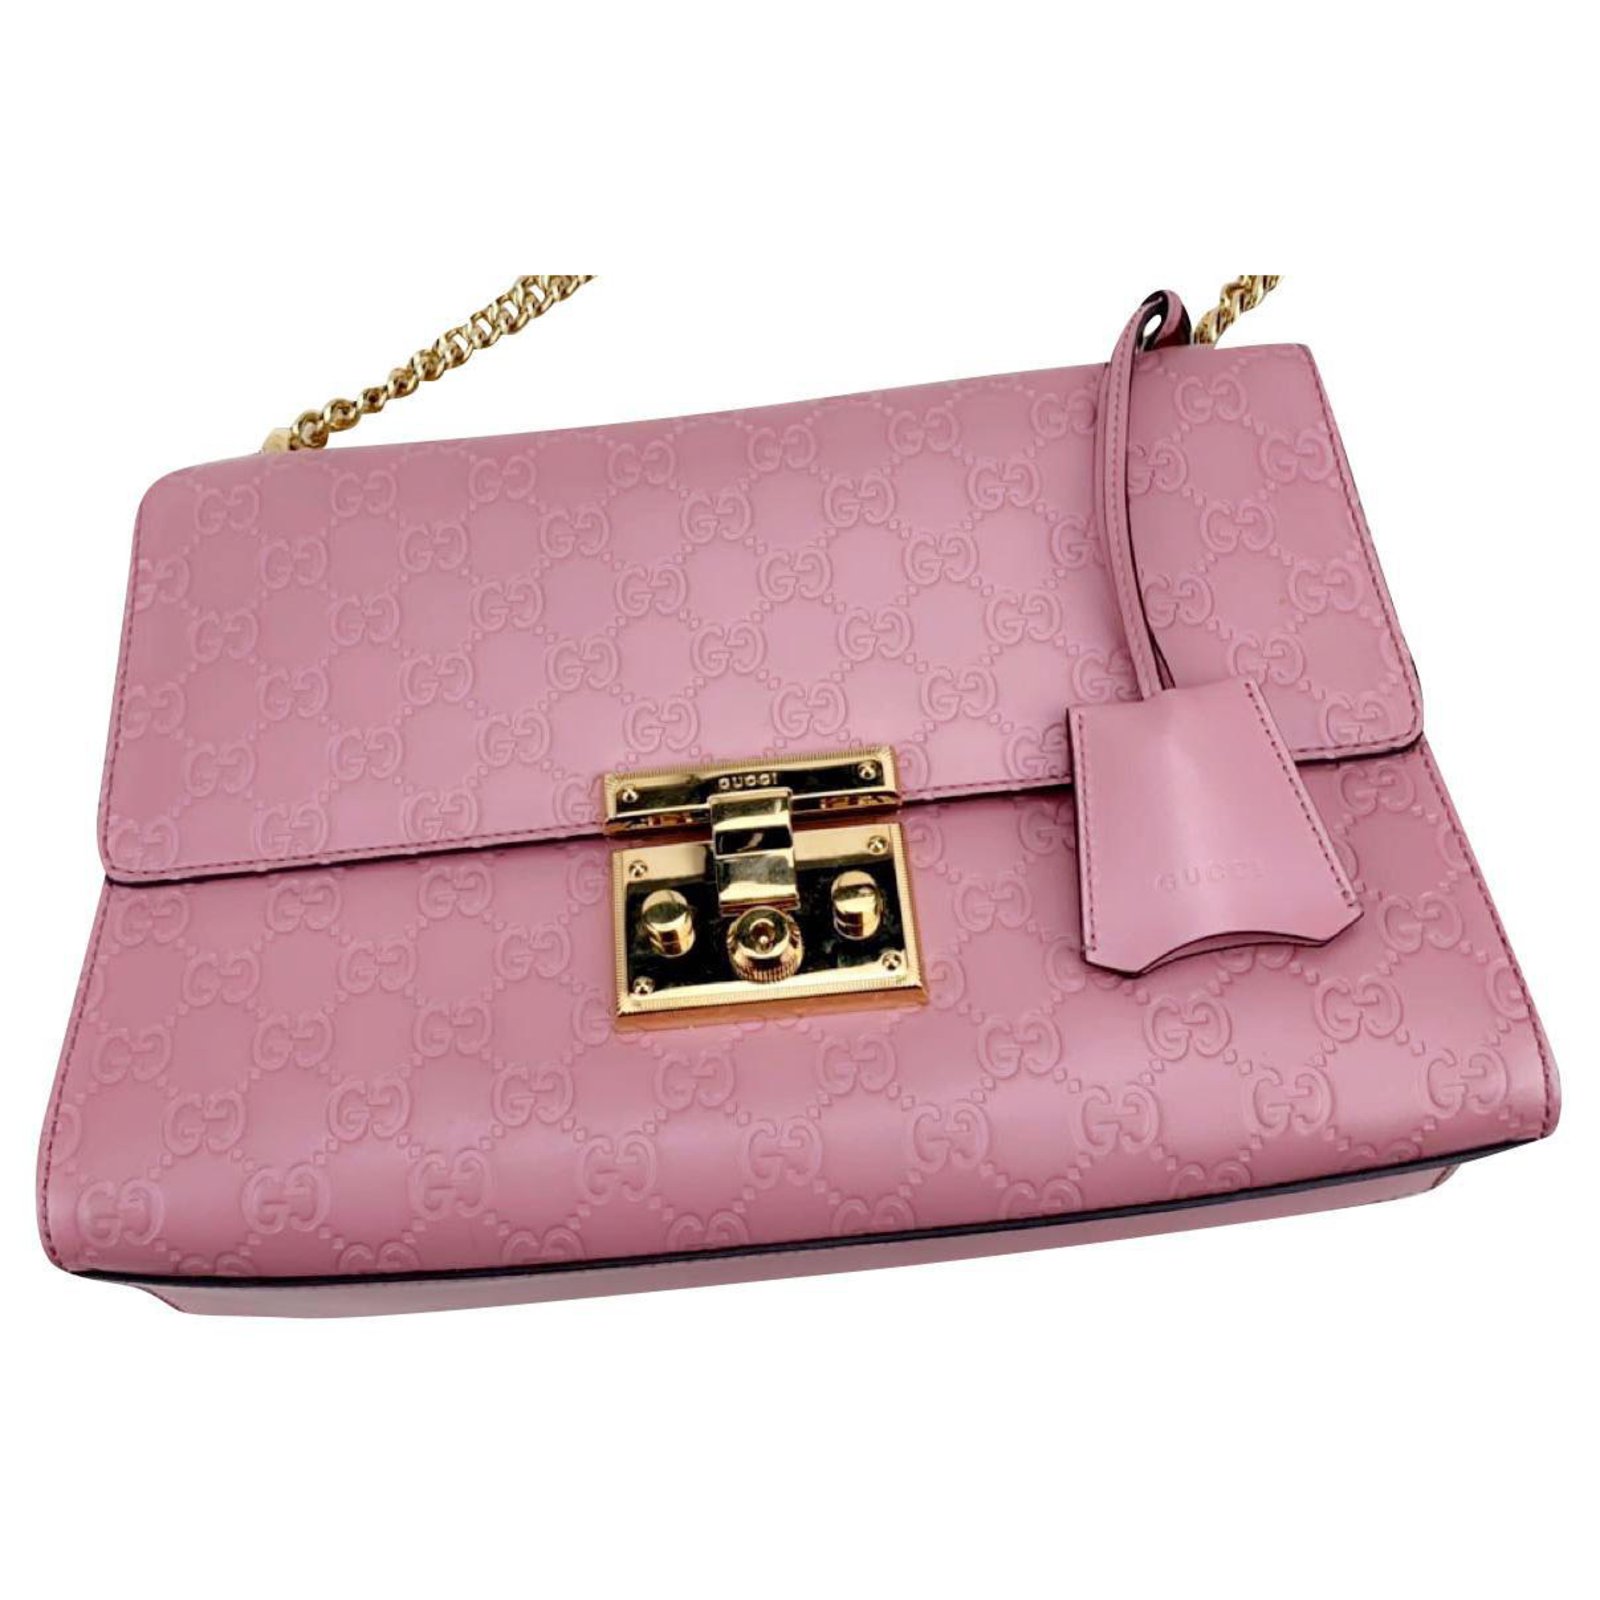 Gucci PADLOCK Handbags Leather Pink ref 